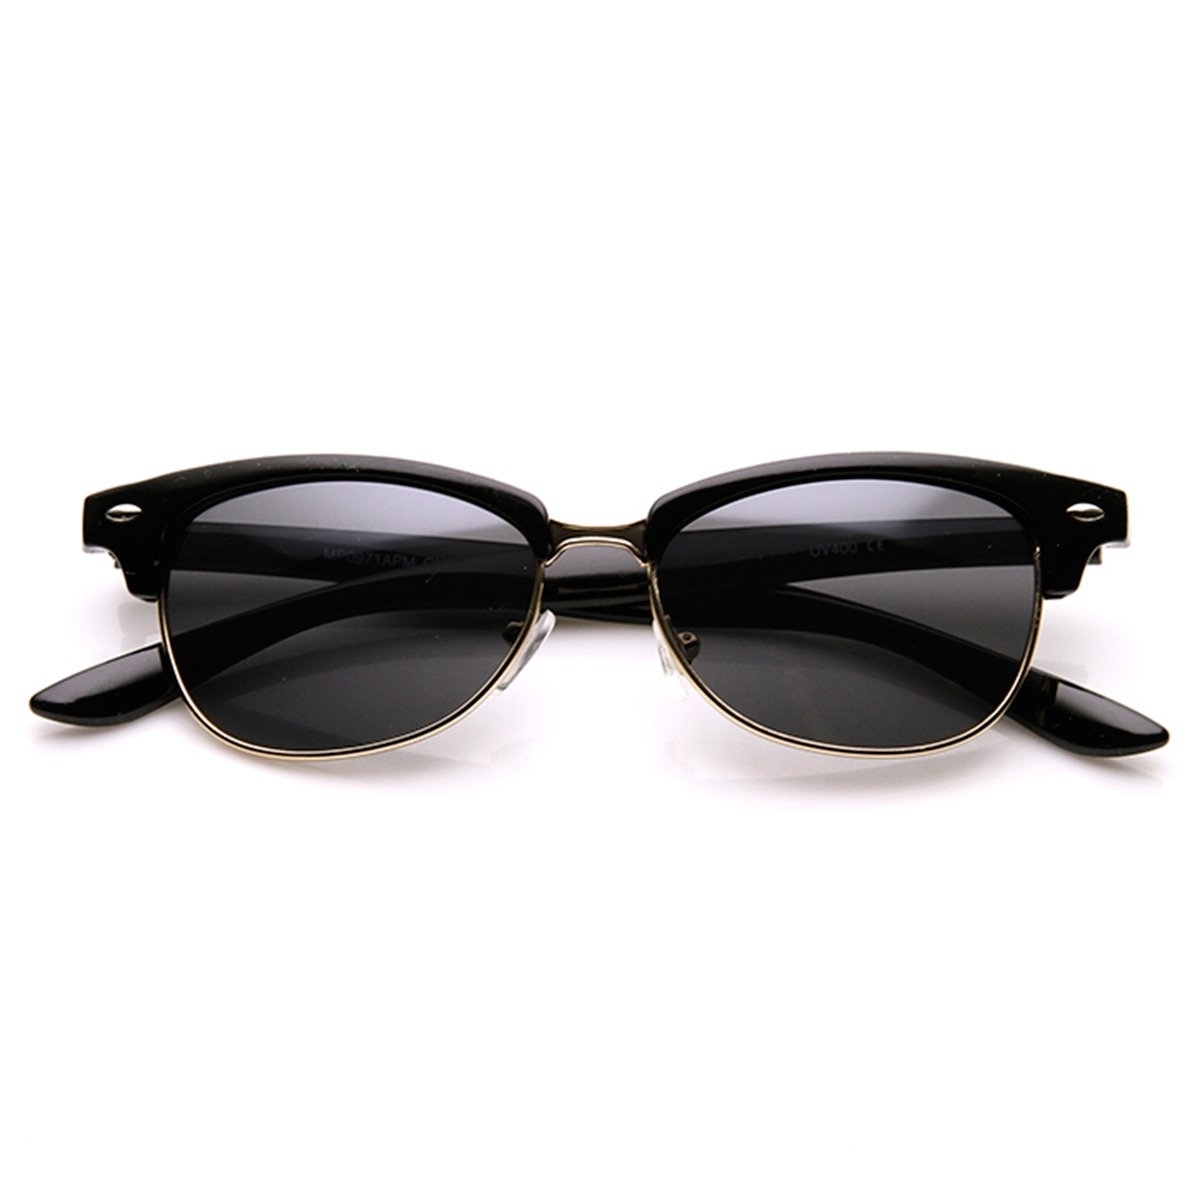 Classic Oval Shaped Semi-Rimless Half Frame Horn Rimmed Sunglasses - Black-Gold Smoke